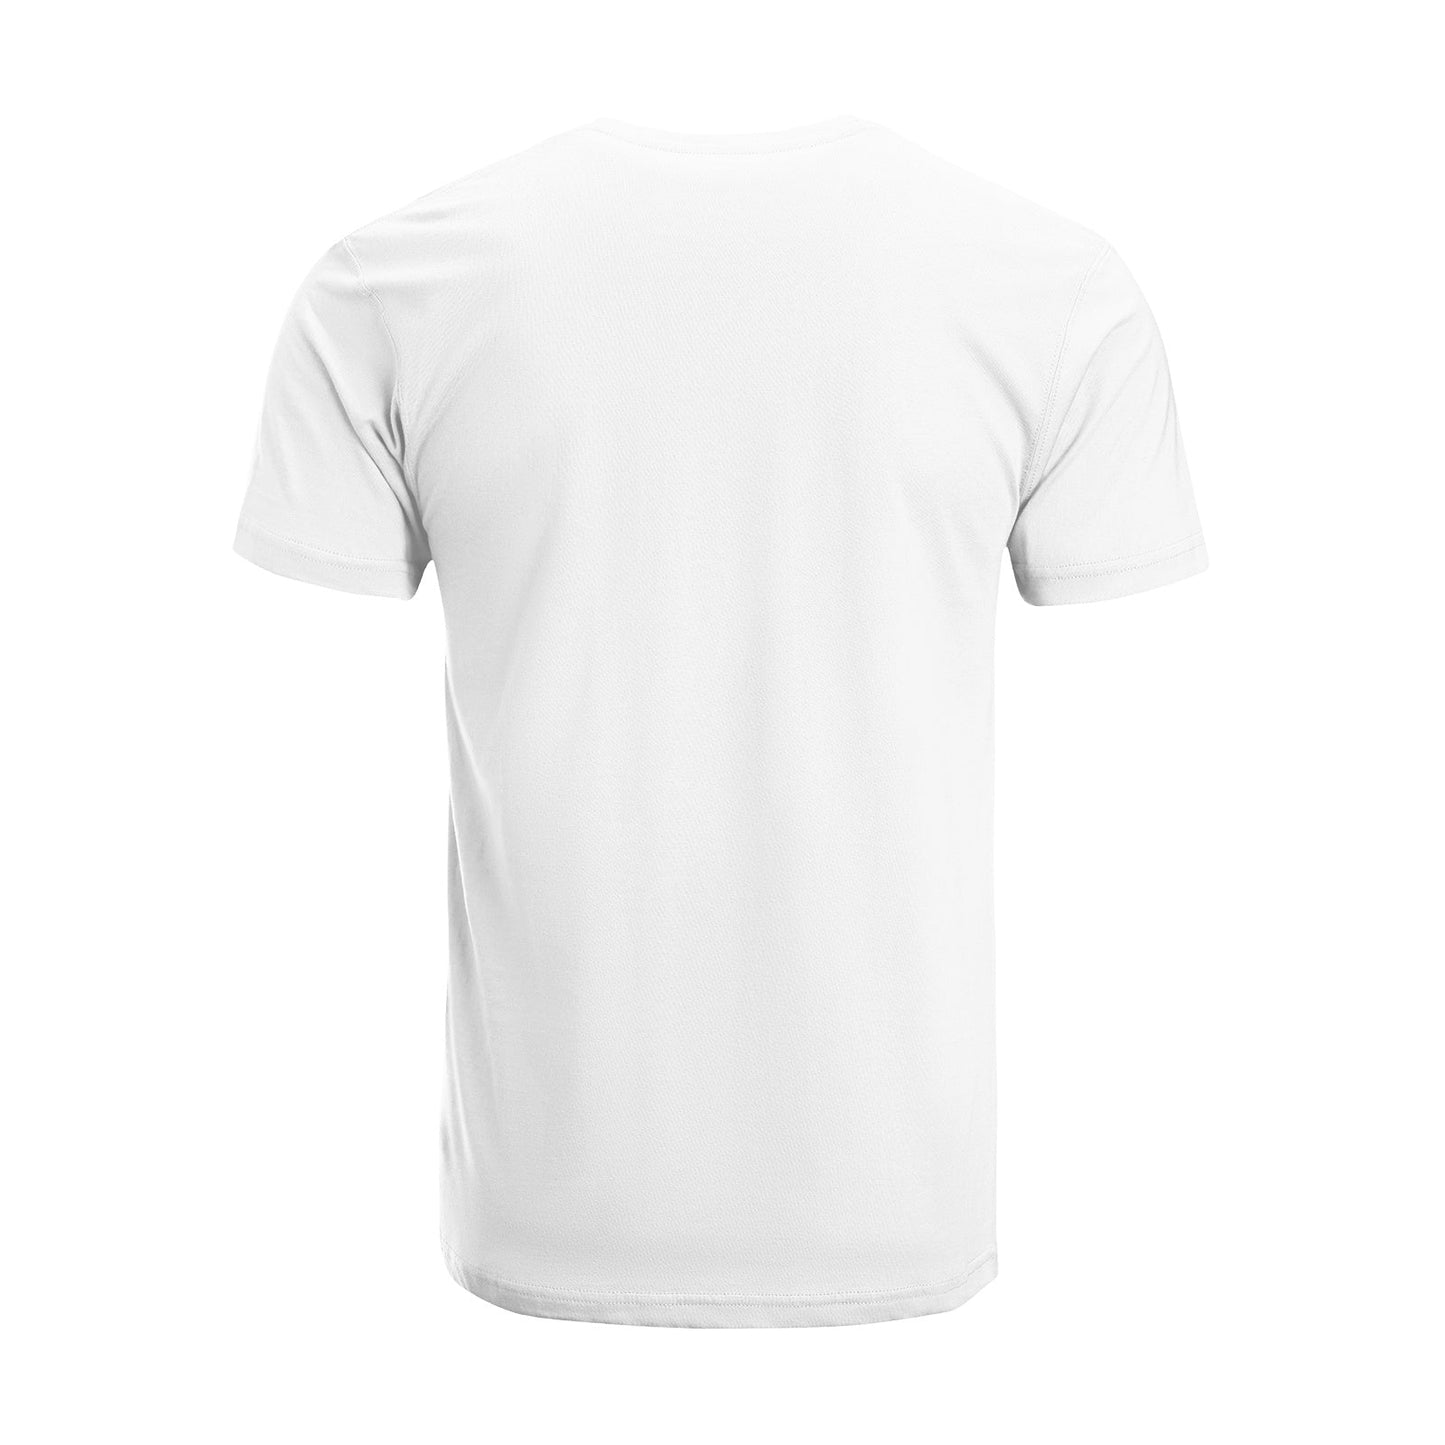 Unisex Short Sleeve Crew Neck Cotton Jersey T-Shirt MOM 49